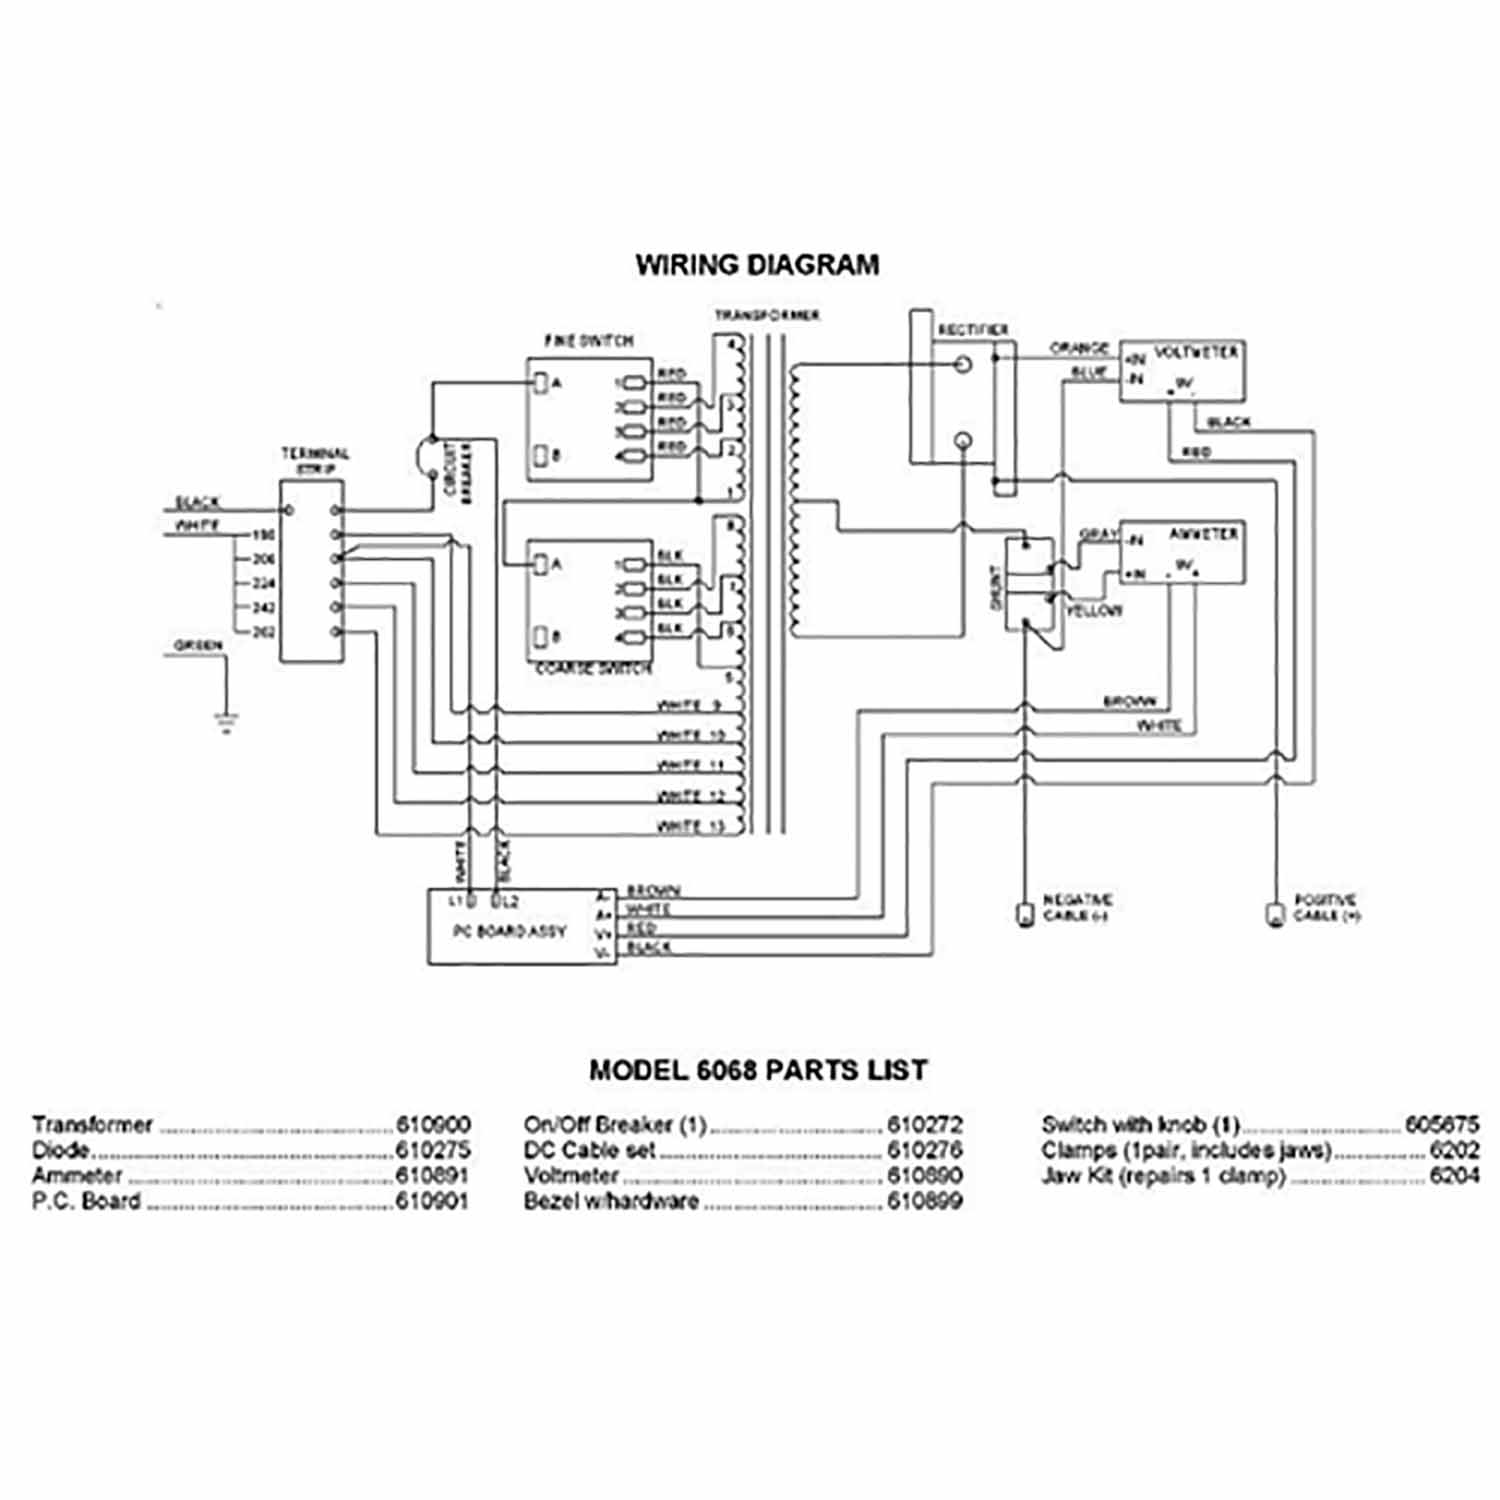 Associated Model 6068 Parts List,Wiring Diagram 4020 24 volt wiring diagram 